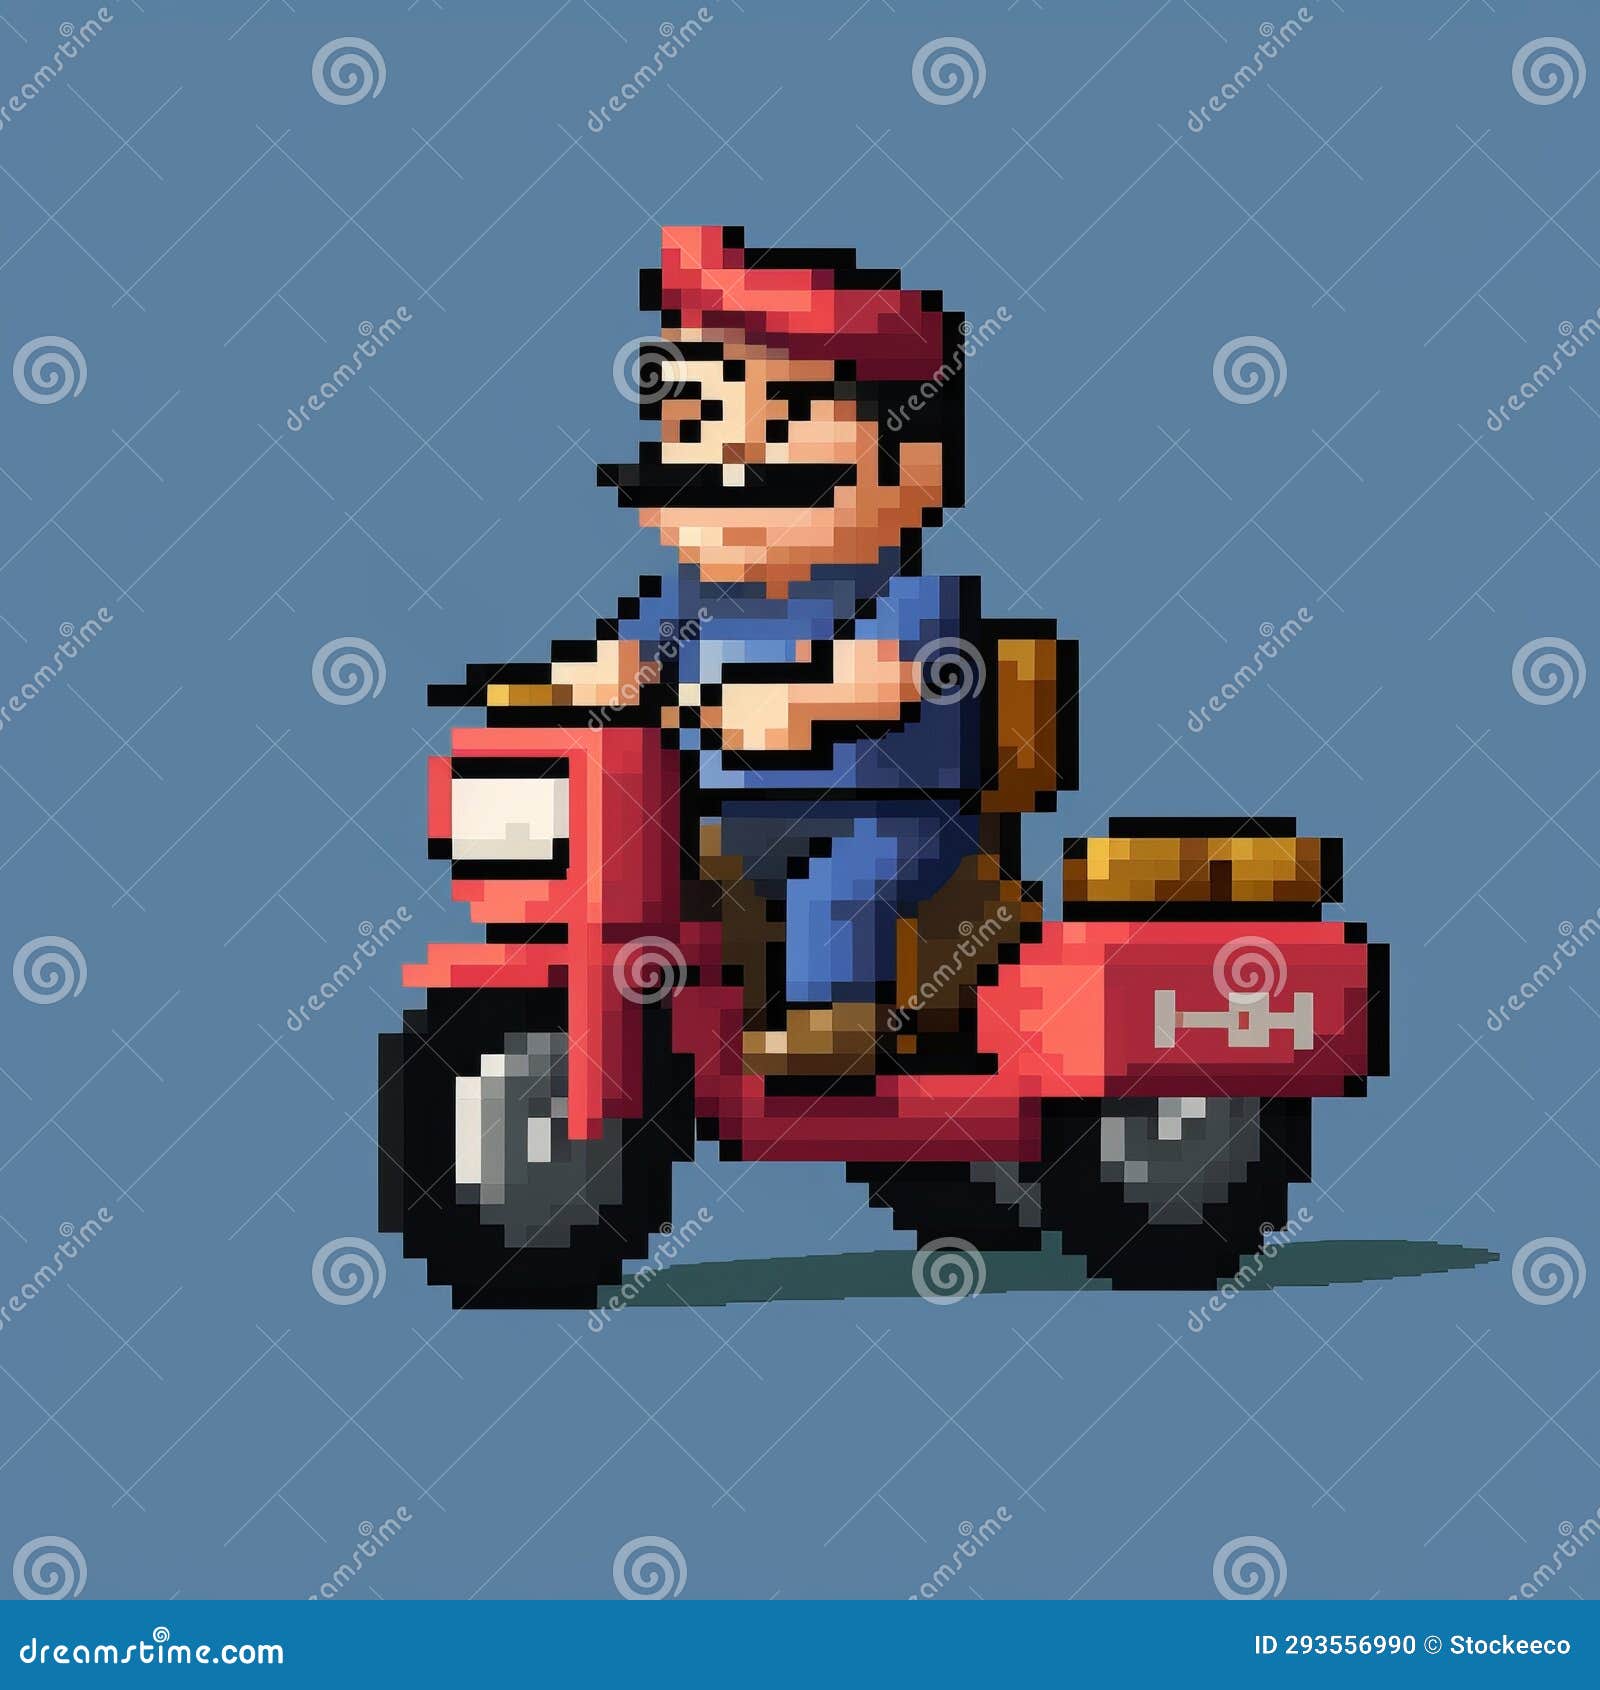 retro pixel art: mario riding motorcycle in eilif peterssen style